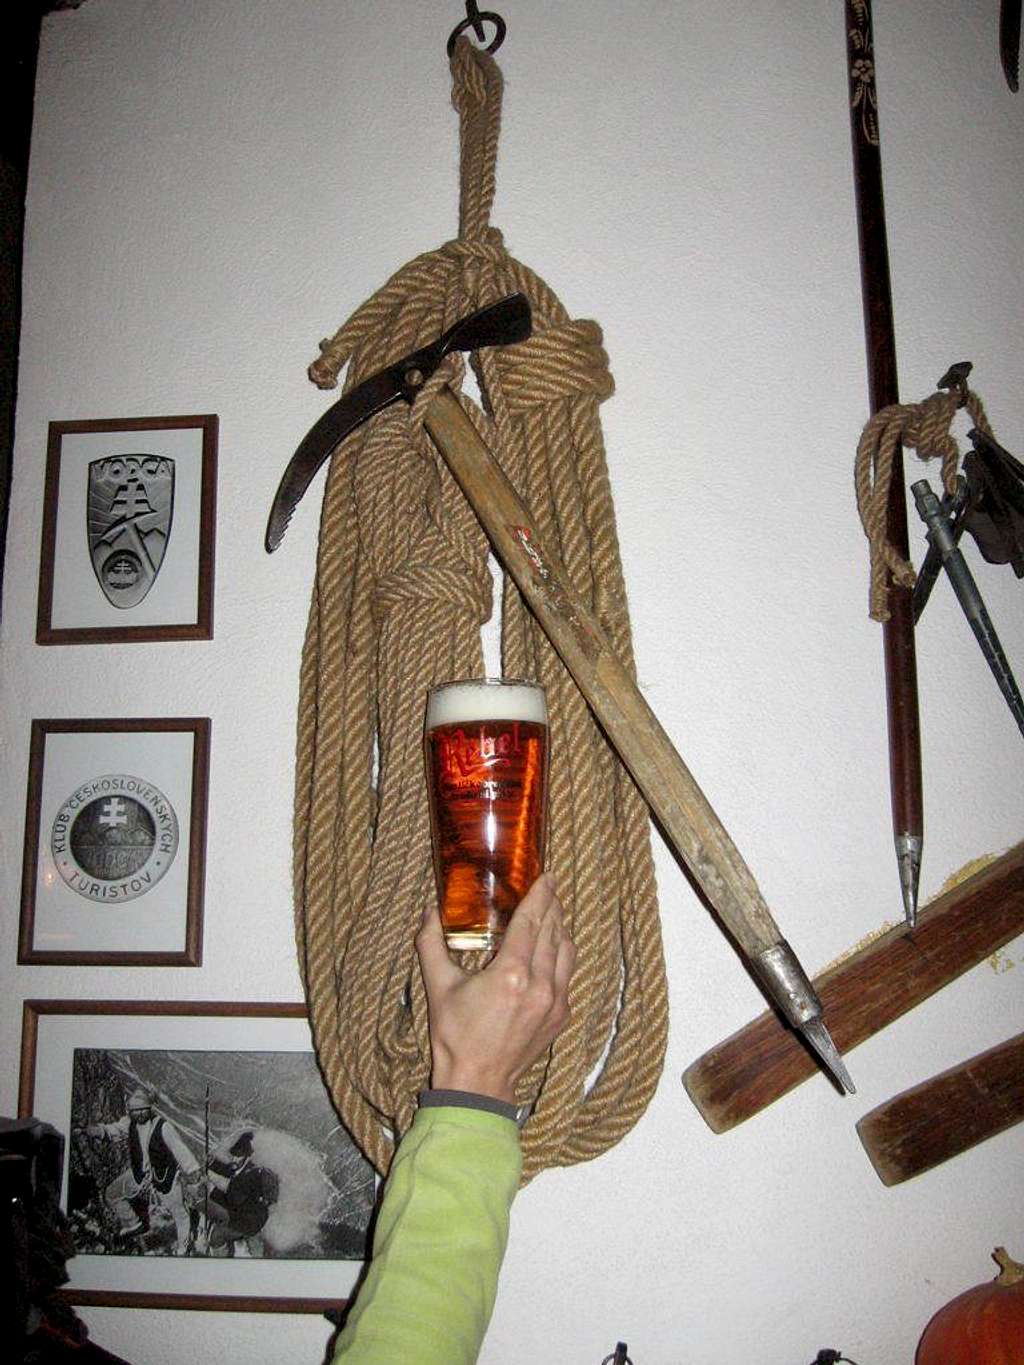 Ancient mountaineering equipment and Rebel beer